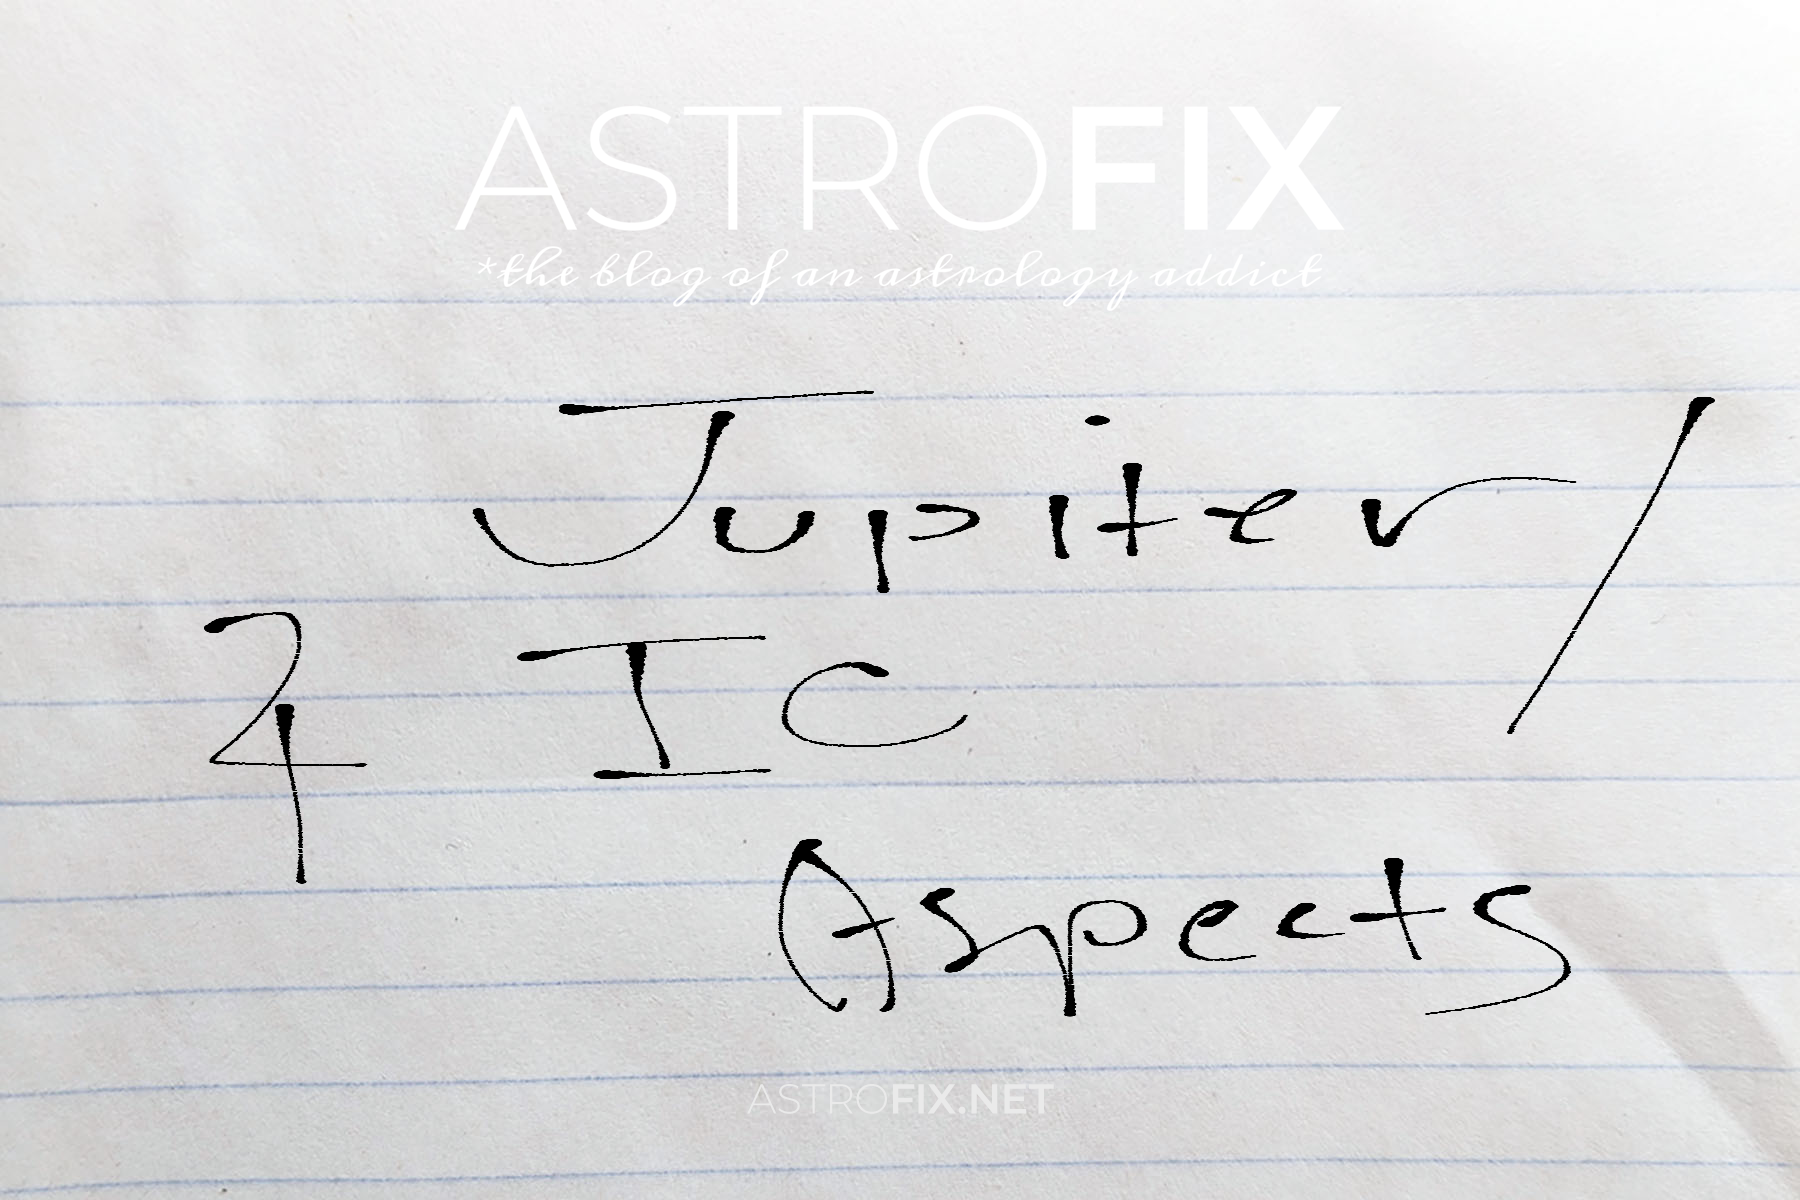 brainstorm-jupiter-ic-astrology-aspects